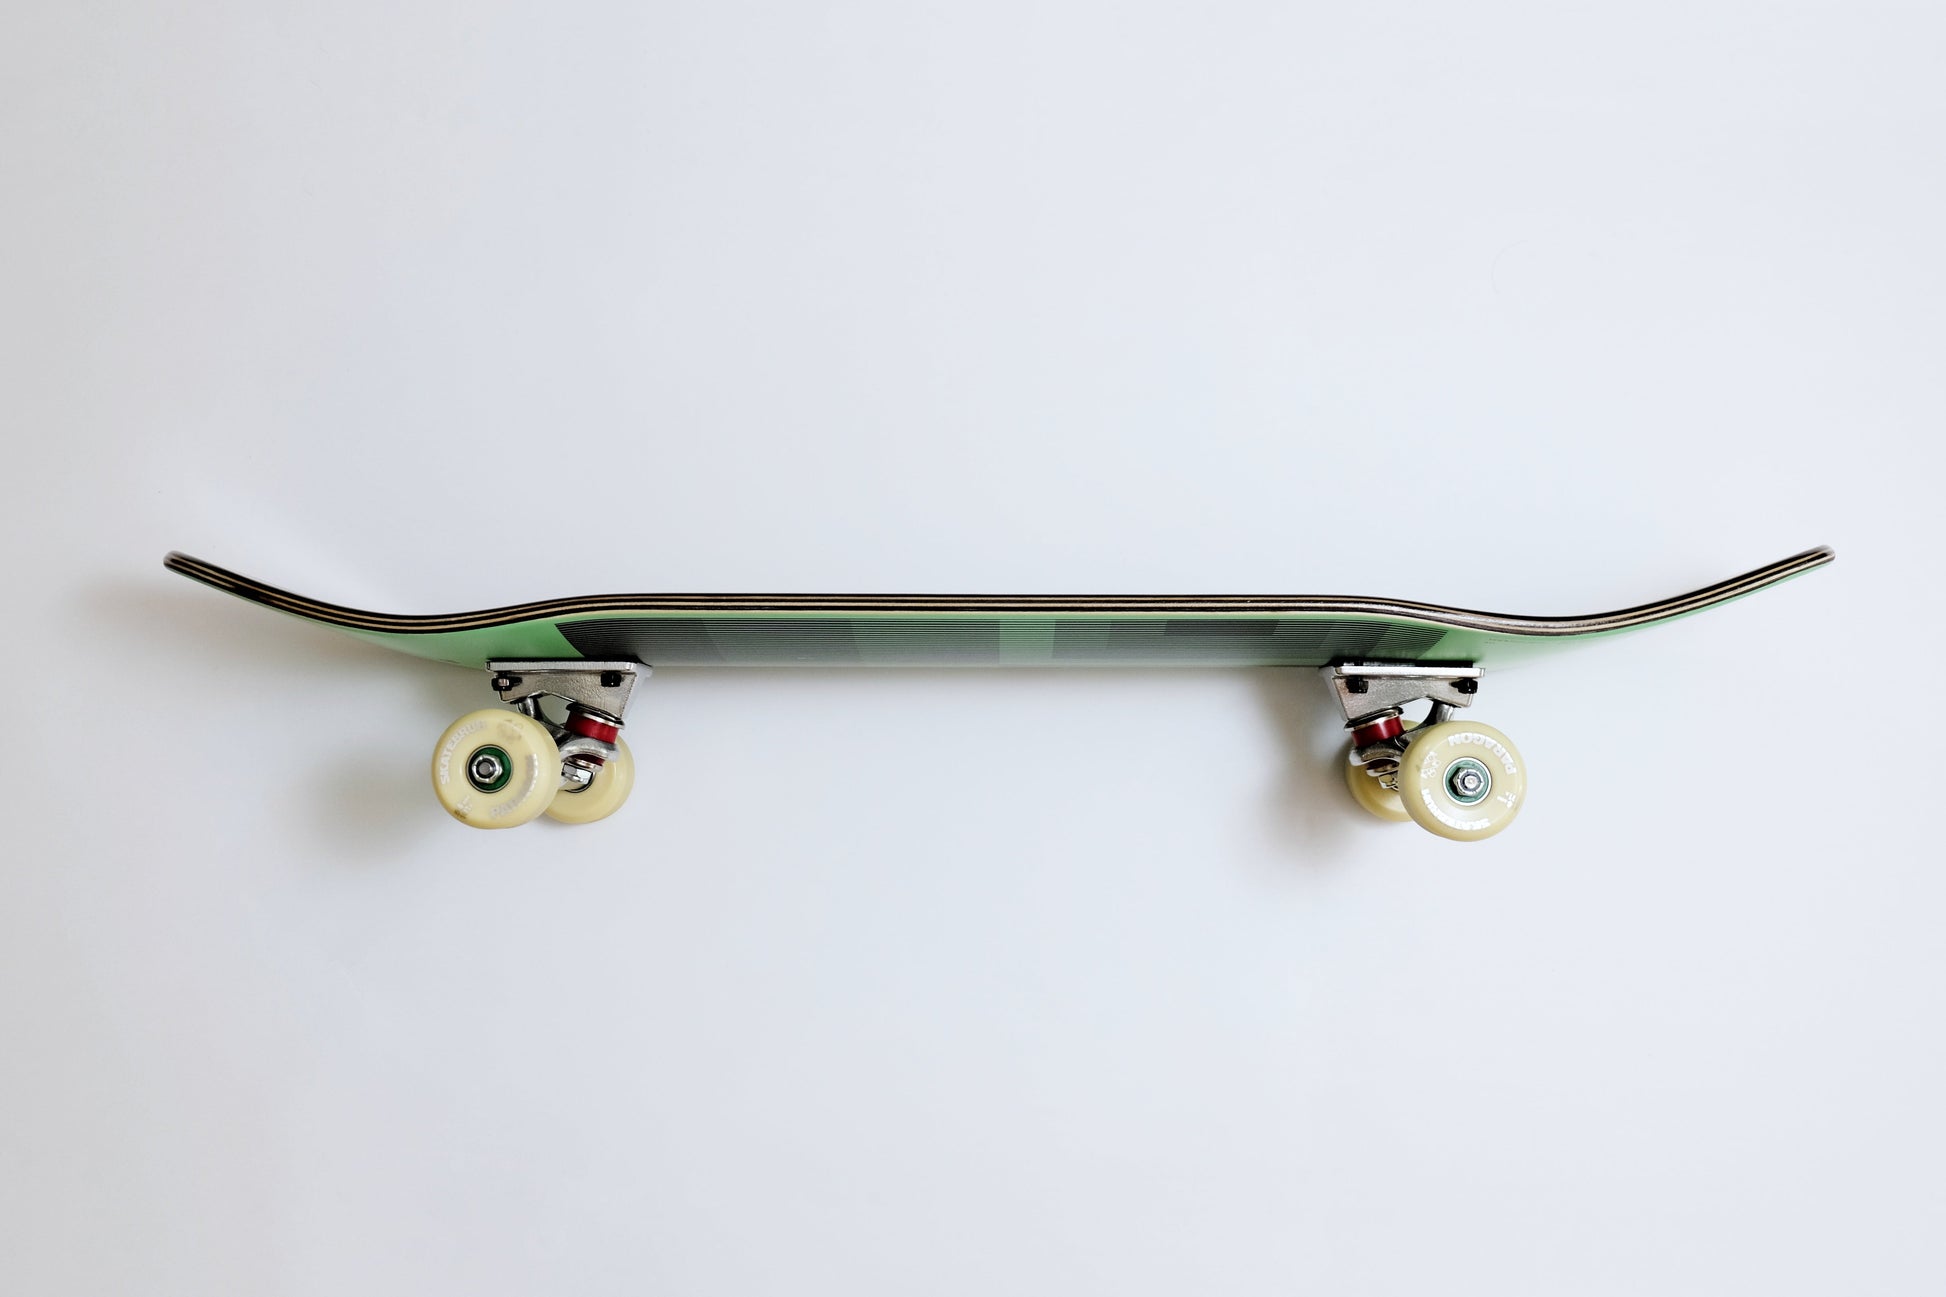 Globe G1 Lineform Mint skateboard - SkatebruhSG